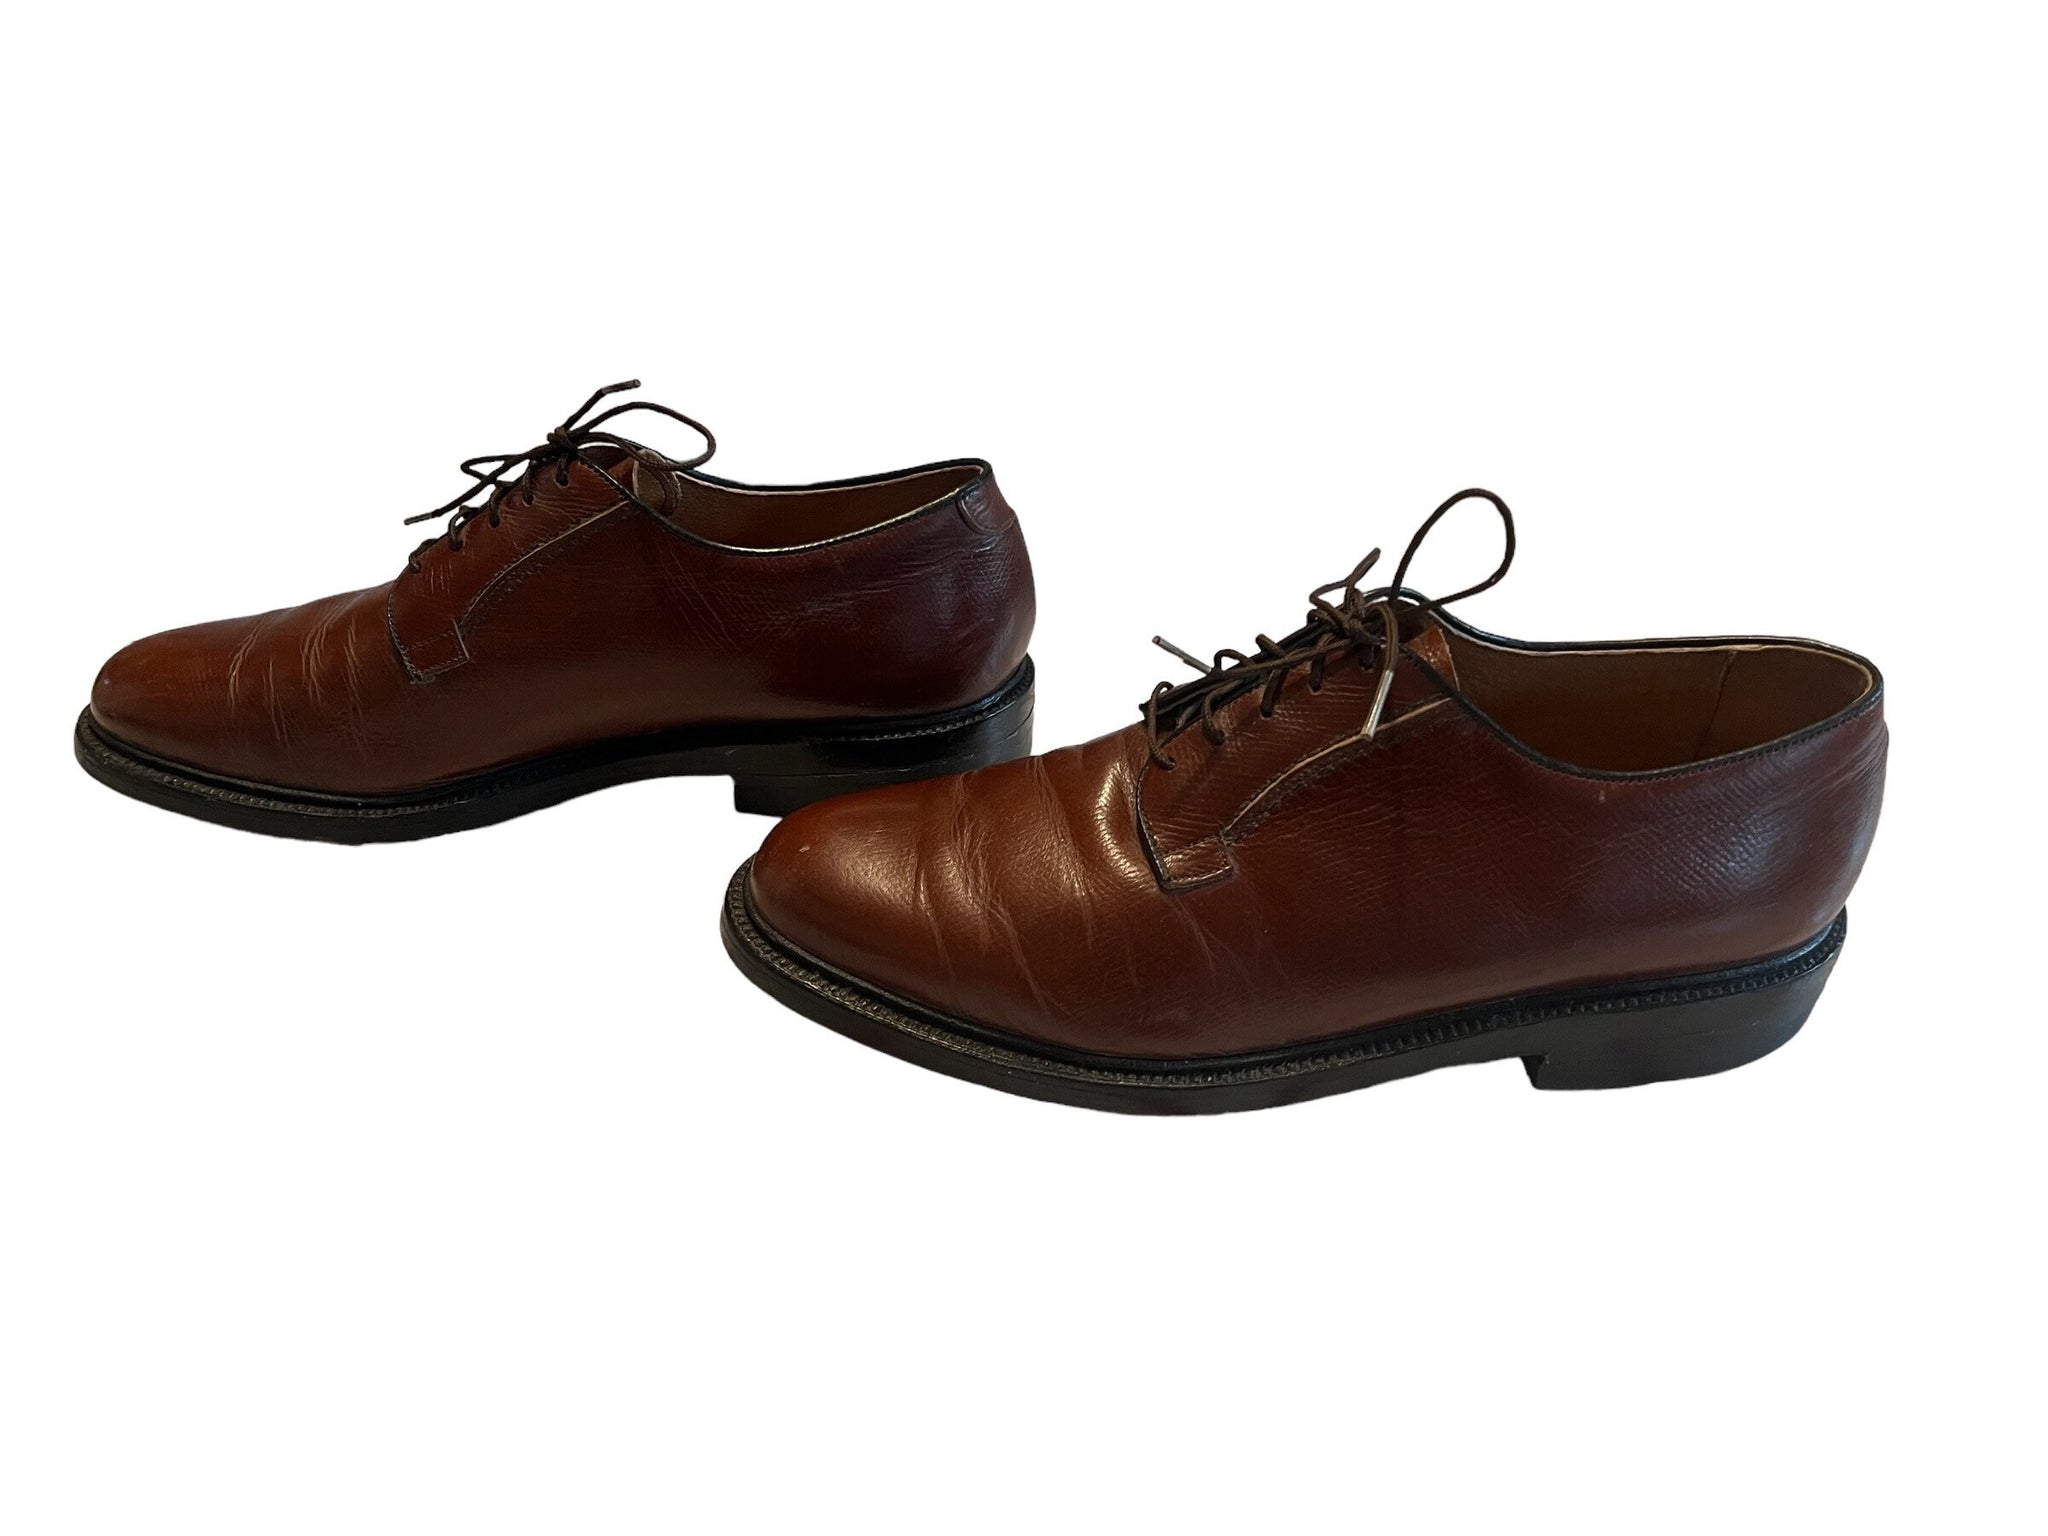 Vintage men's brown oxford dress shoes 9 C